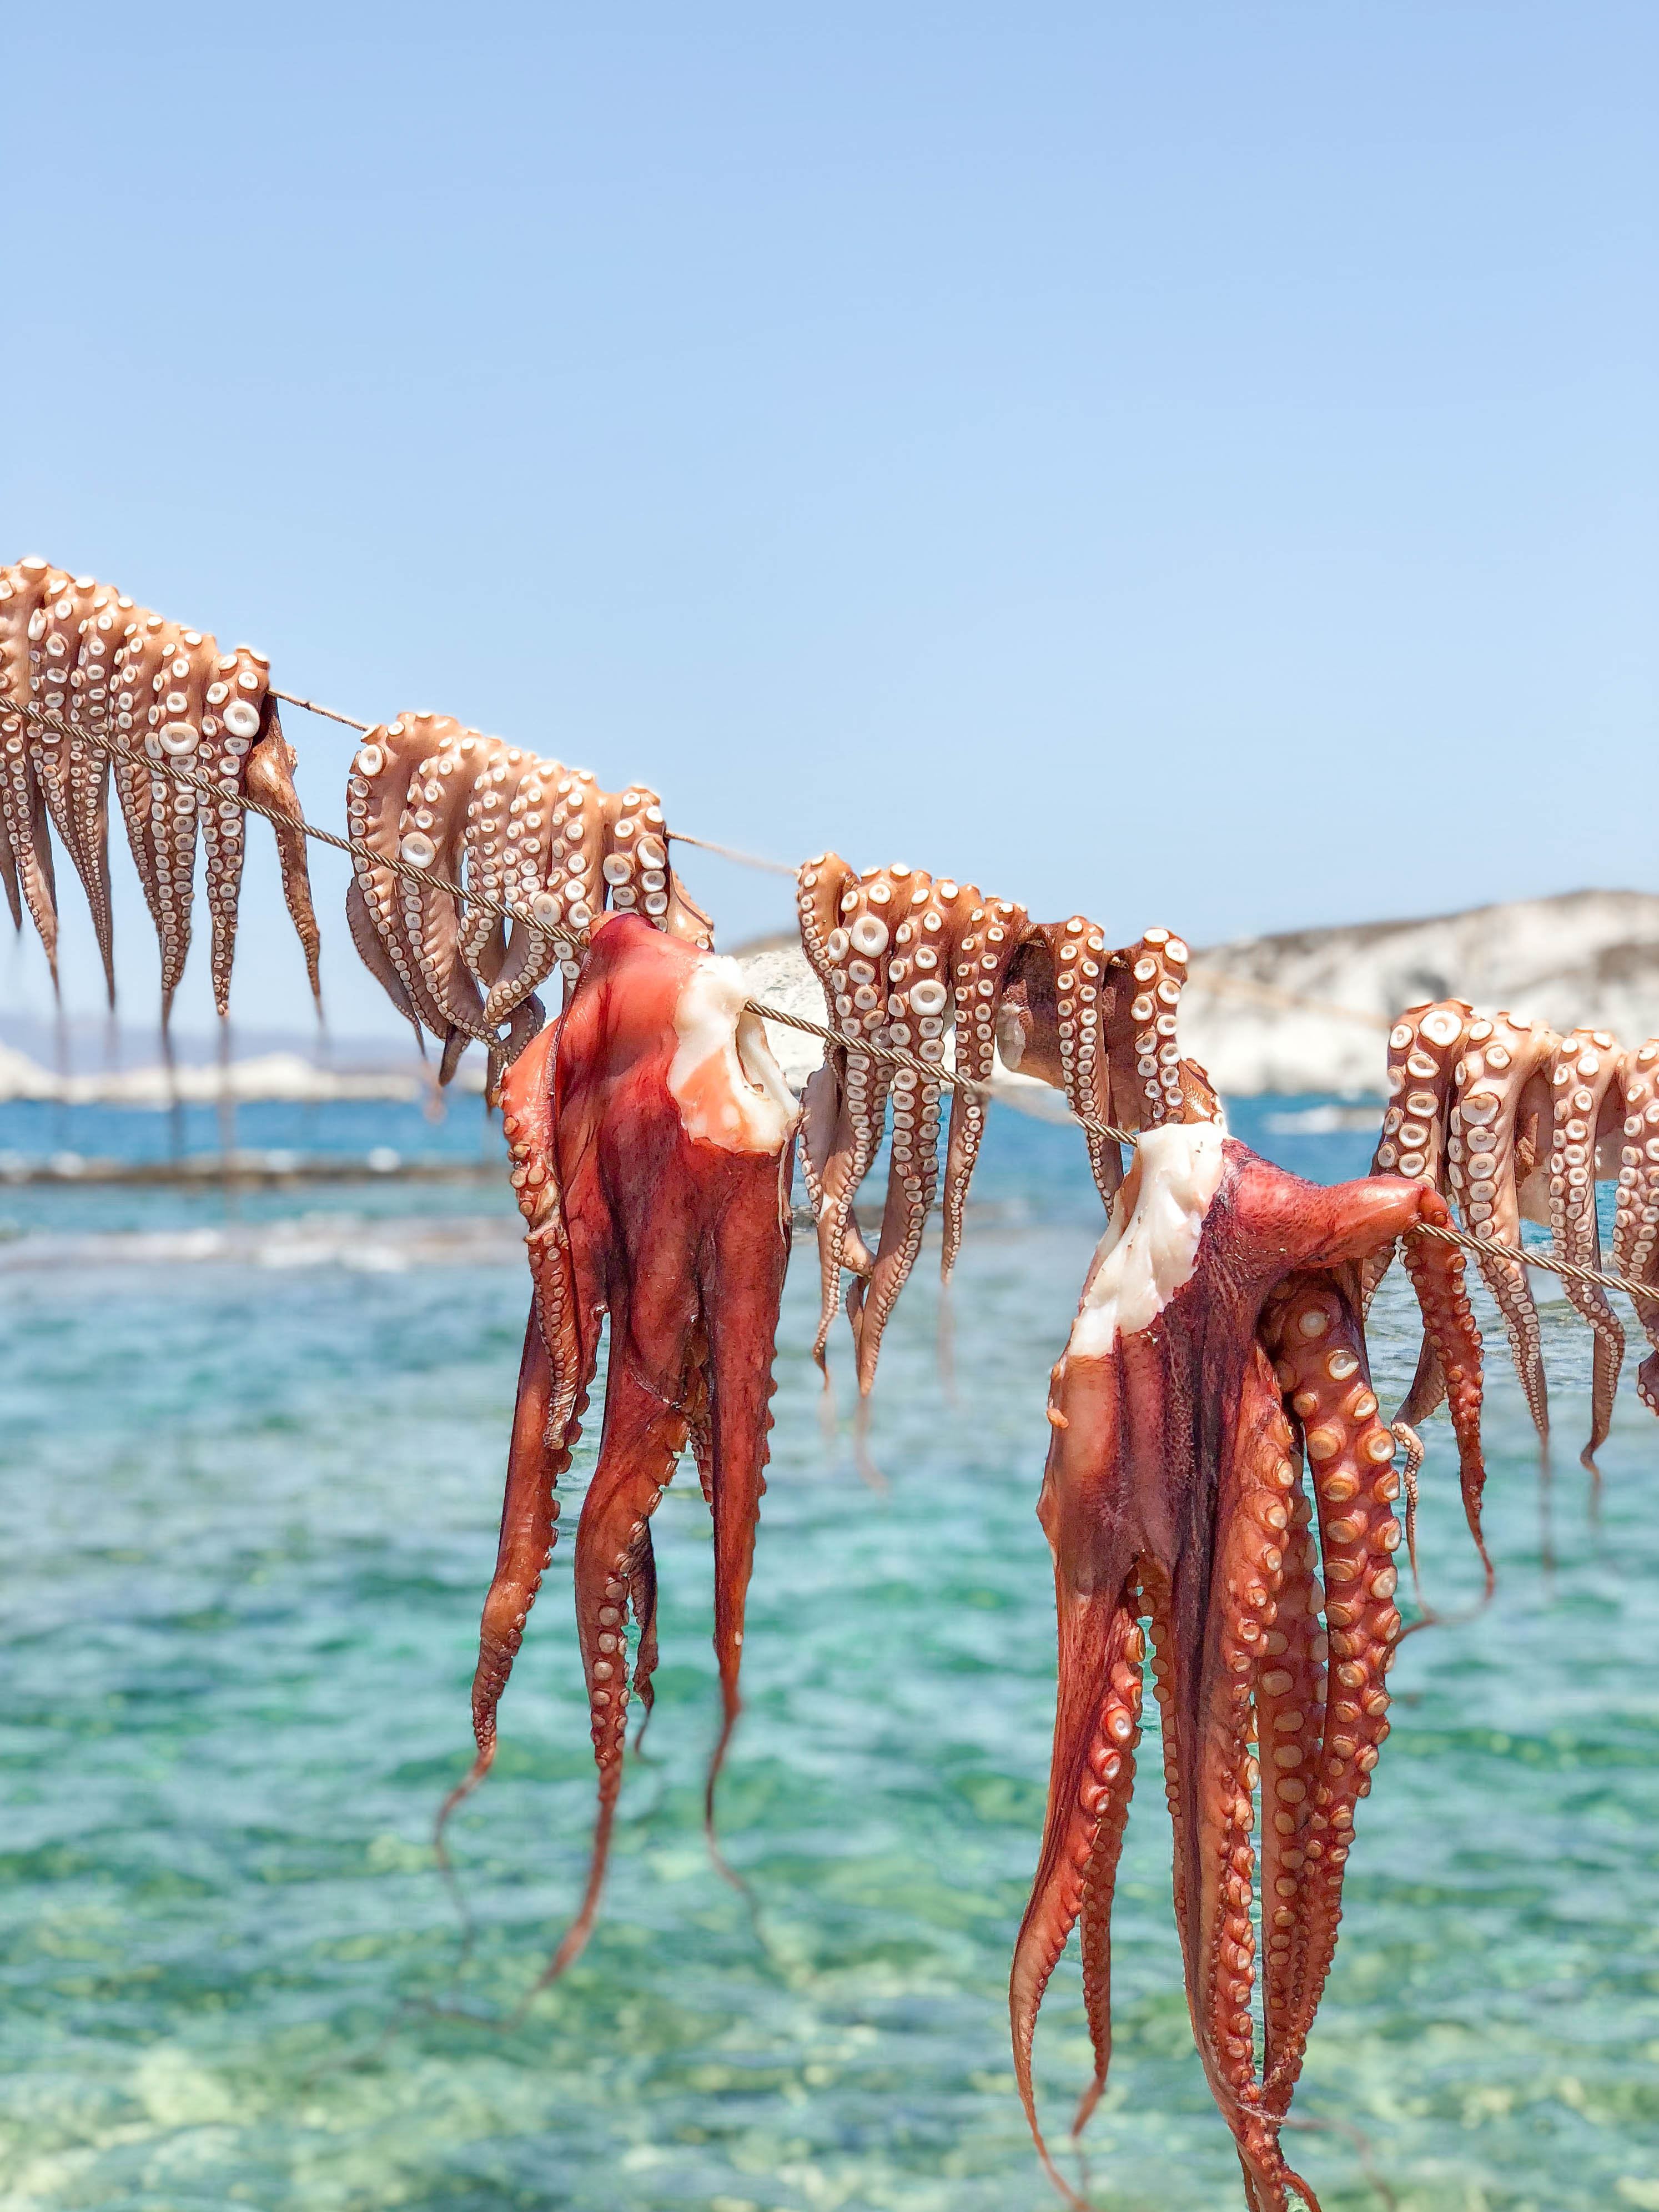 Medusa Restaurant: Hanging Octopus and Sea Views at the Best Restaurant in Milos